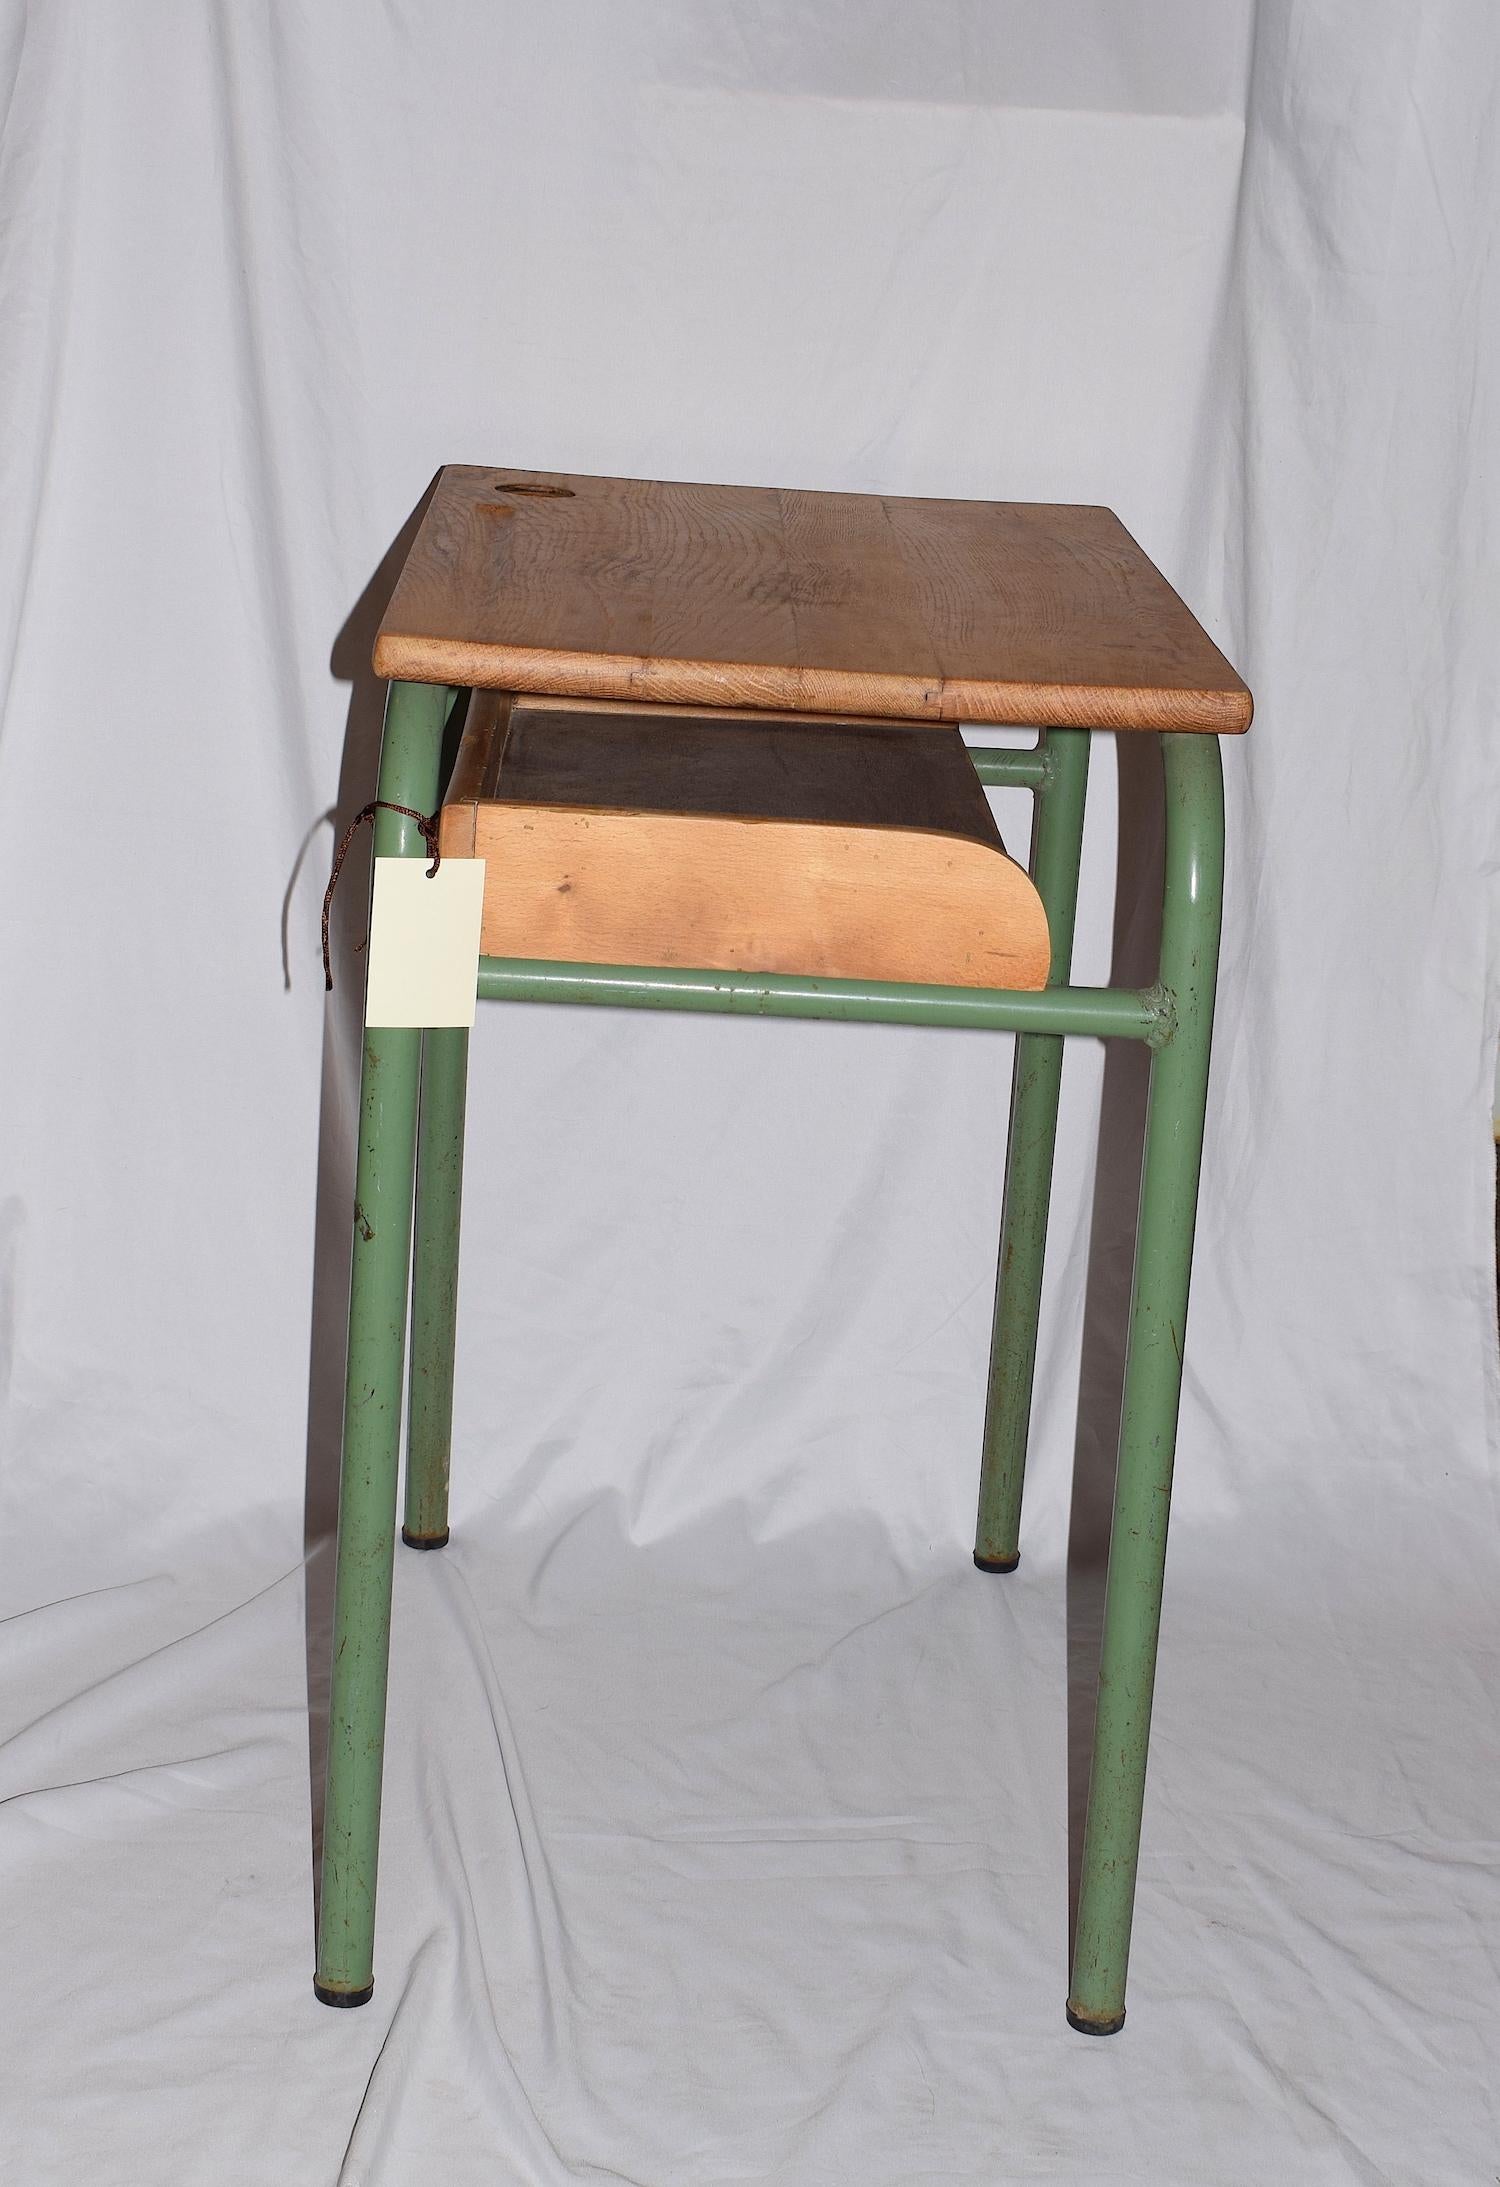 20th Century Mid-Century Tubular Metal and Wooden Top School Desk, Industrial in Design